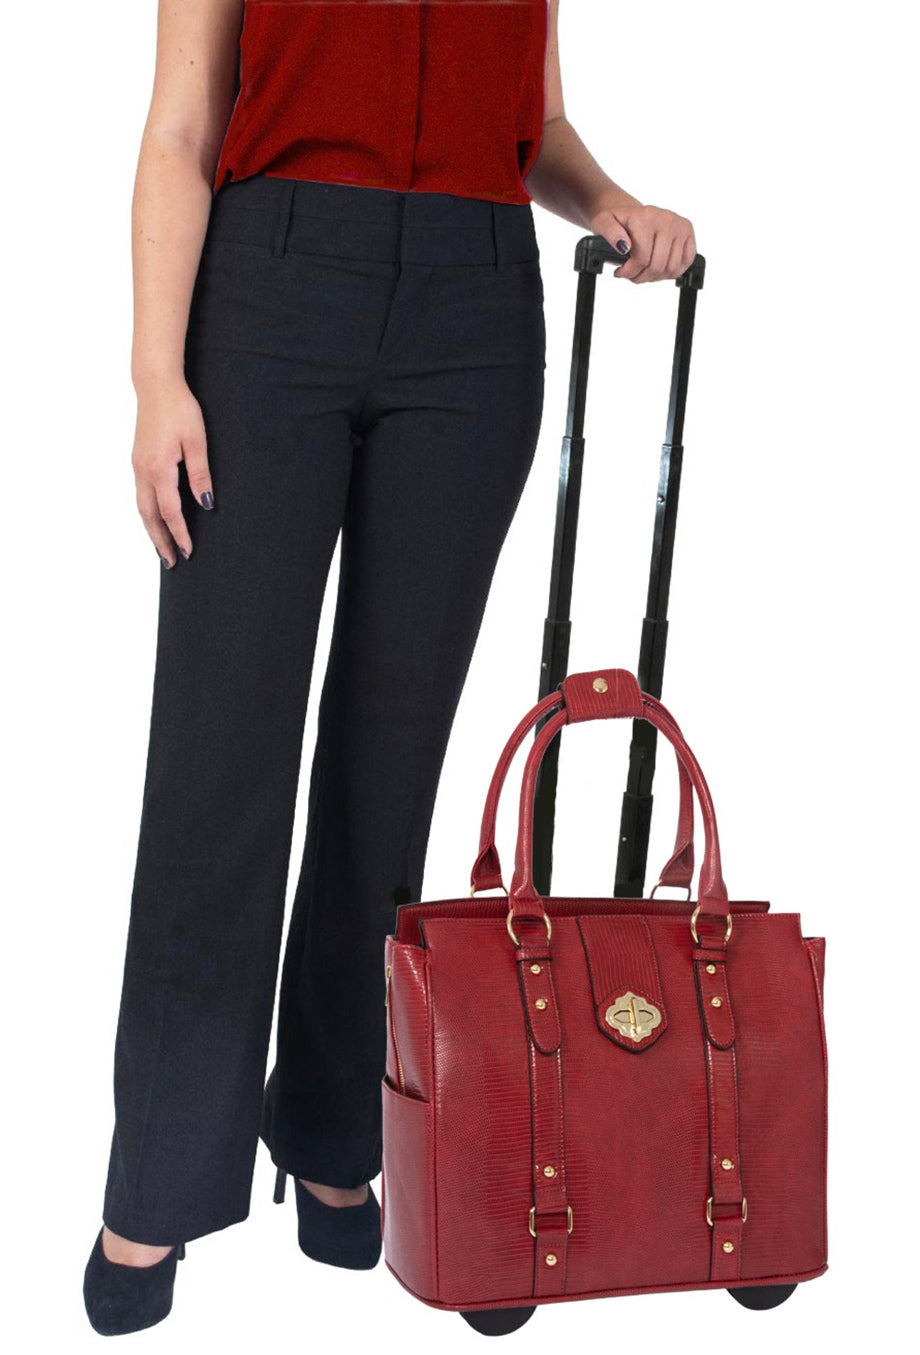 Business Rolling Laptop Bag  Custom Rolling Handbags - JKM and Company